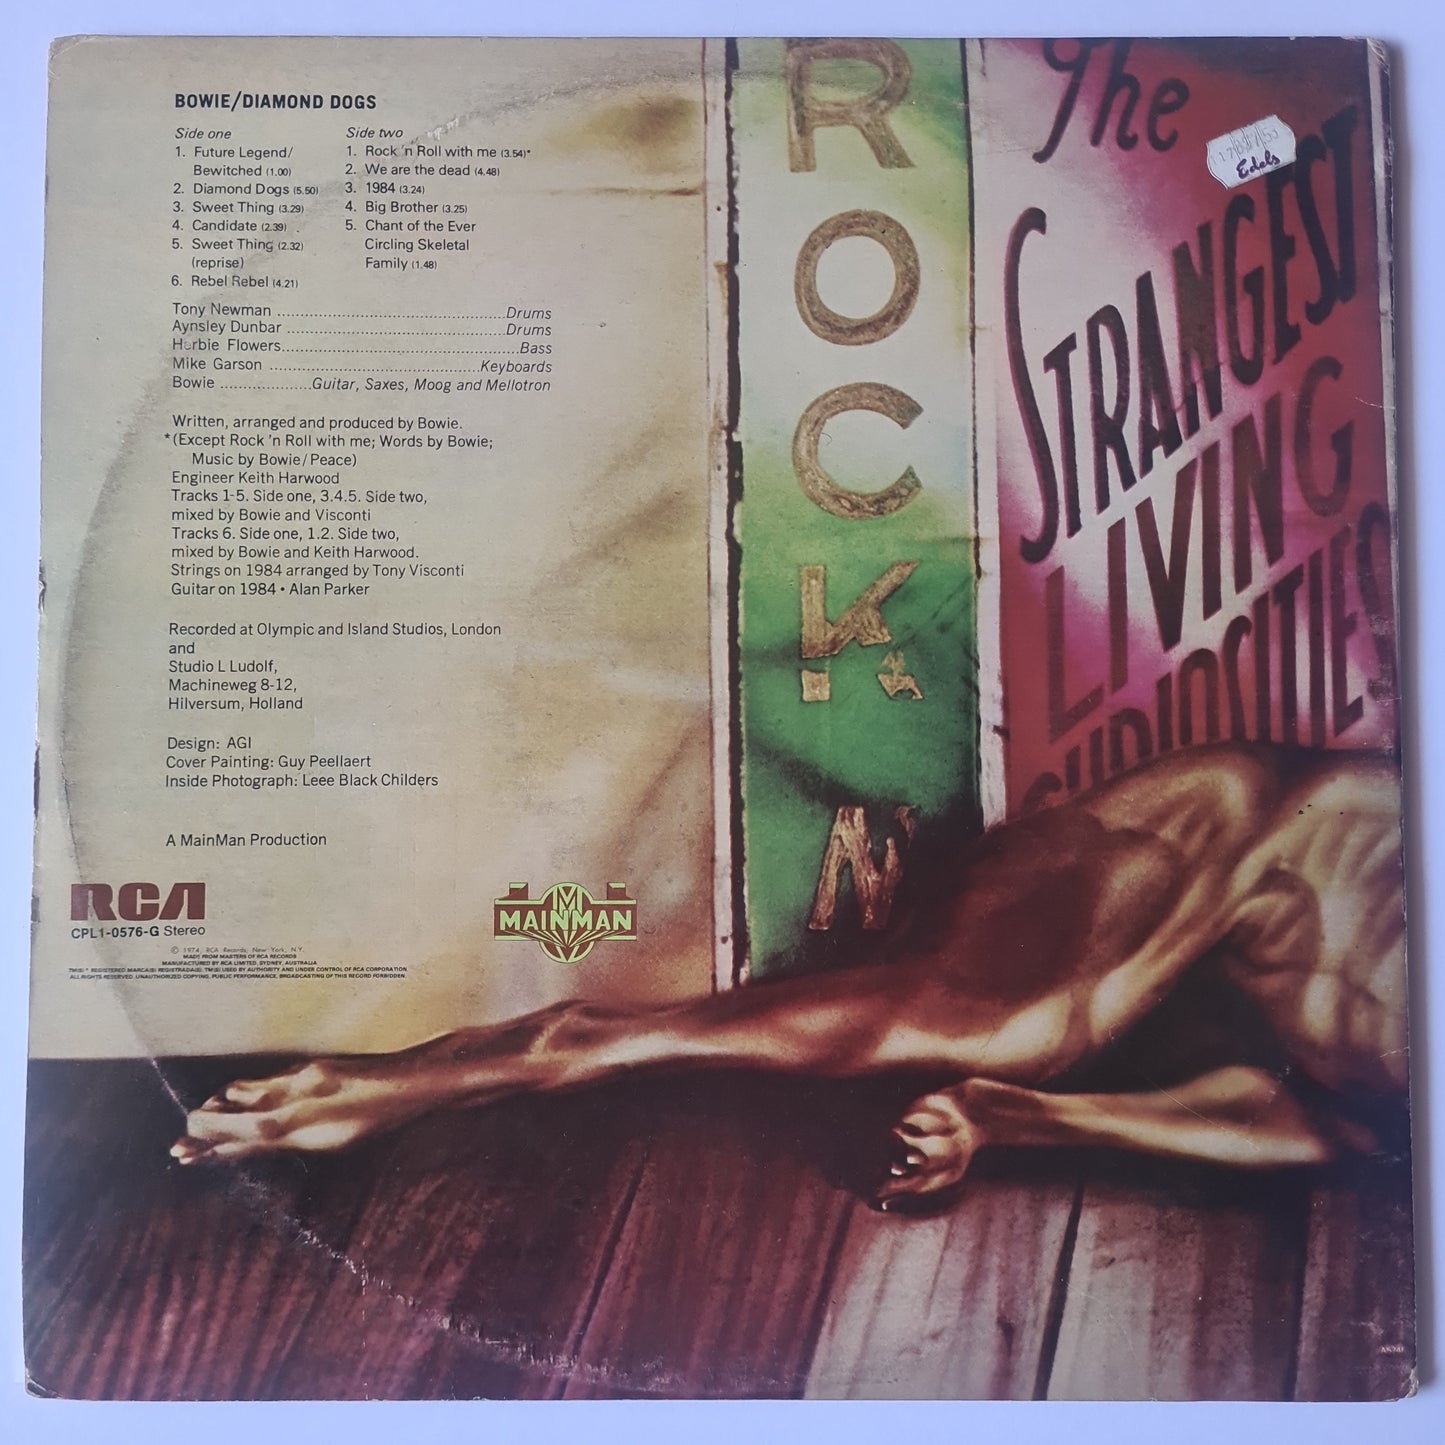 David Bowie – Diamond Dogs - 1974 (Gatefold) - Vinyl Record